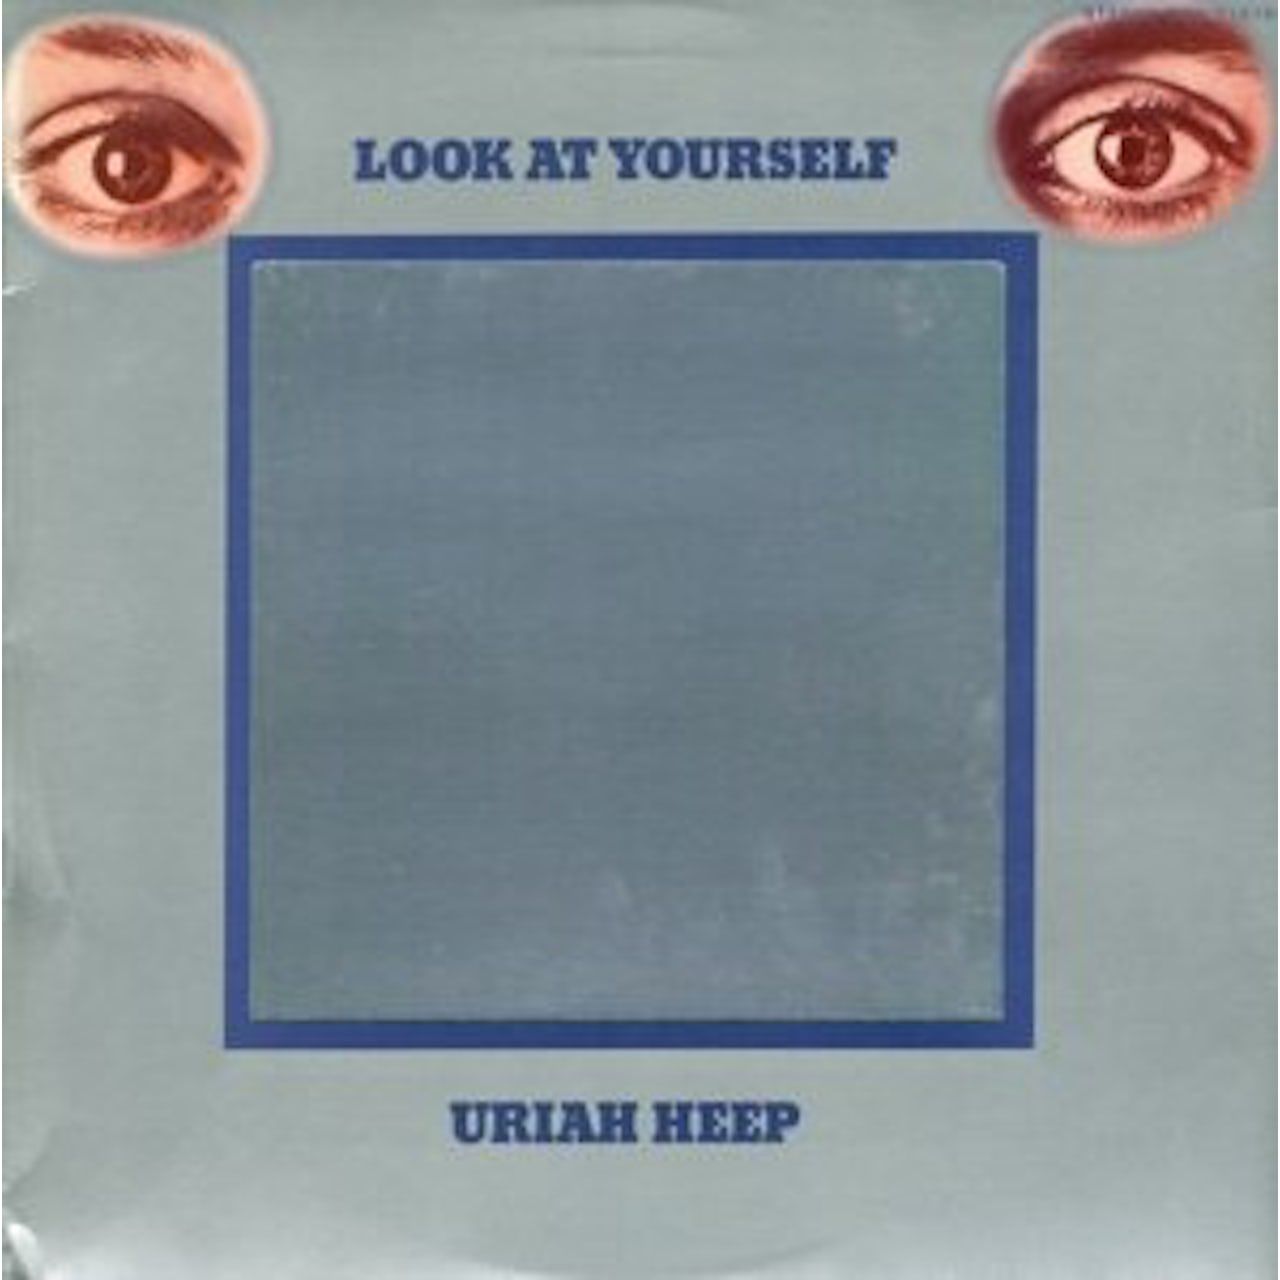 5414939928376, Виниловая пластинка Uriah Heep, Look At Yourself виниловая пластинка eu uriah heep salisbury